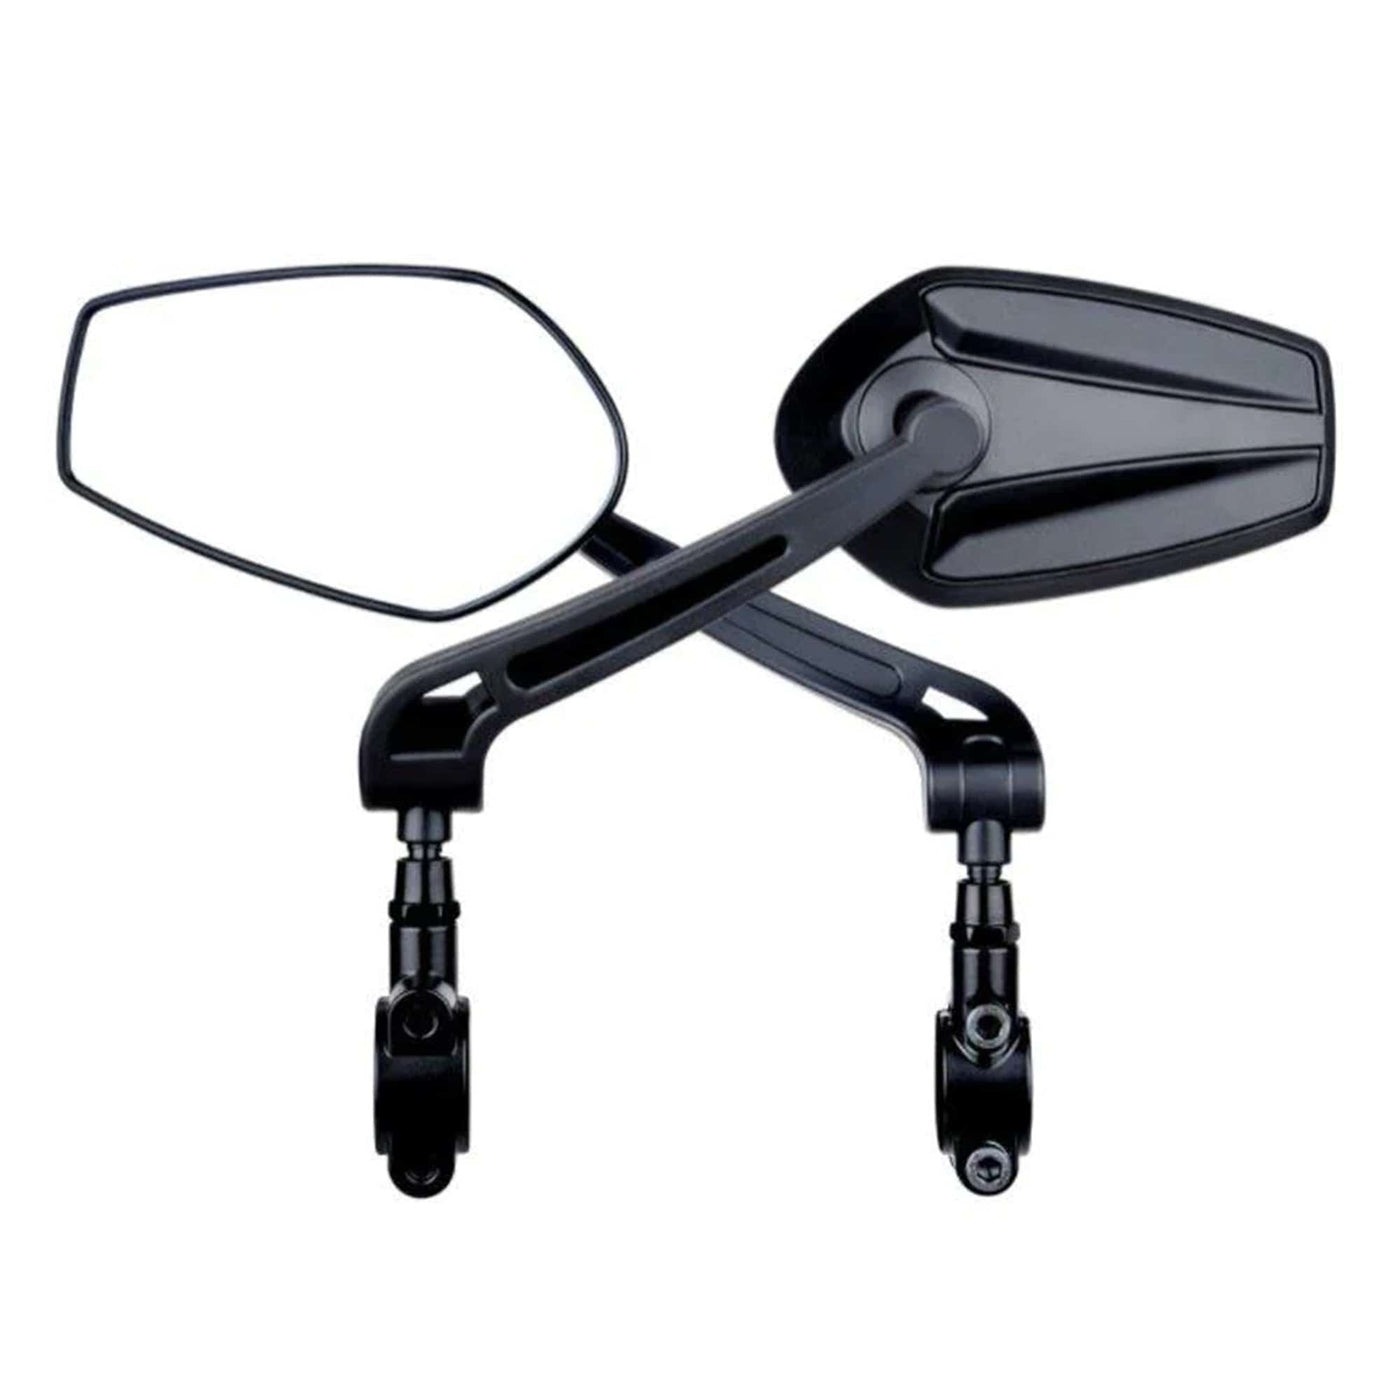 Tesgo E-Bike HD Wide-angle Rearview Mirror (A pair)